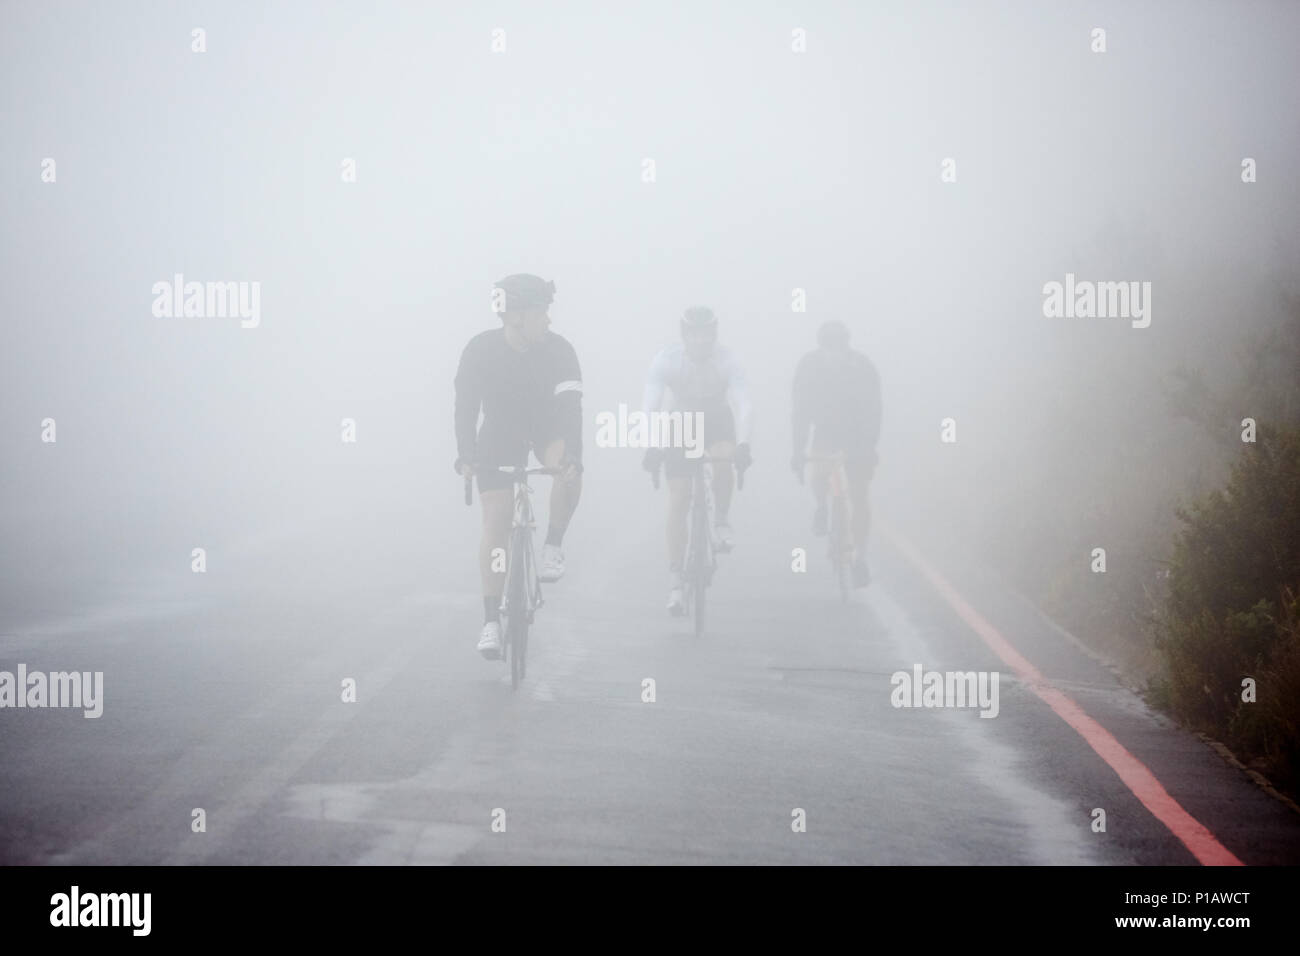 Dedicated male cyclists cycling on rainy, foggy road Stock Photo